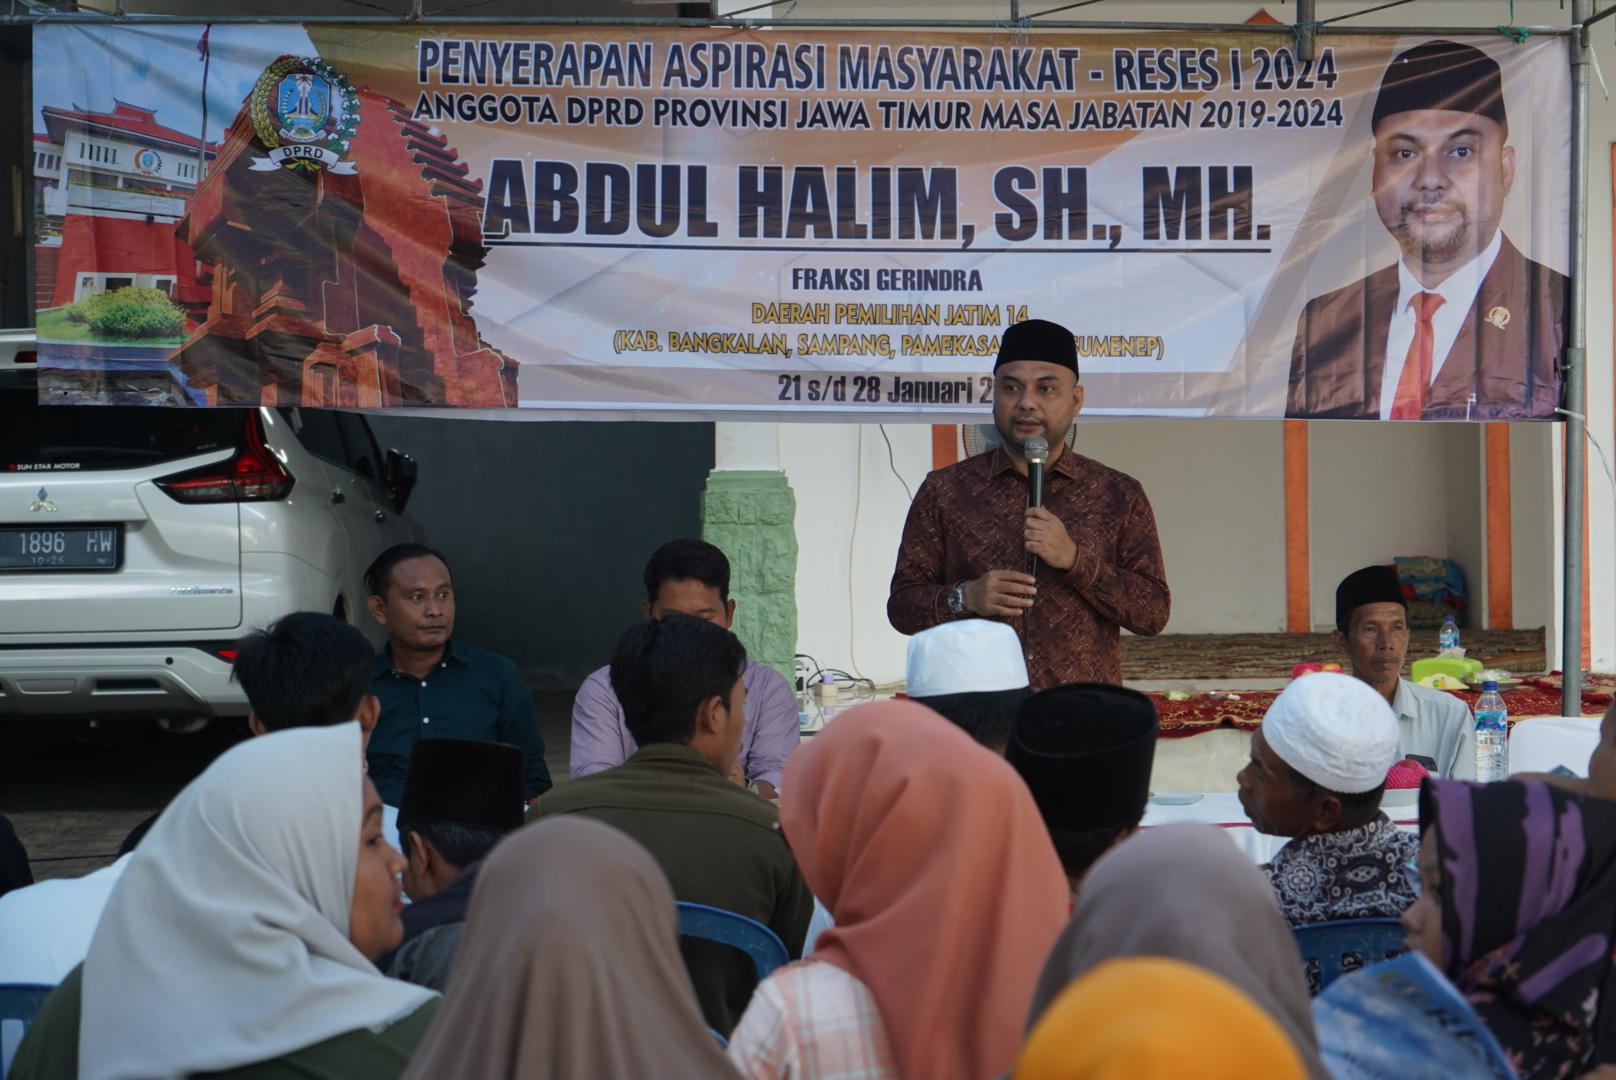 Ketua Komisi C DPRD Provinsi Jawa Timur Abdul Halim melakukan serap aspirasi Reses I tahun 2024 DPRD Provinsi Jawa Timur di Desa Gili Anyar.